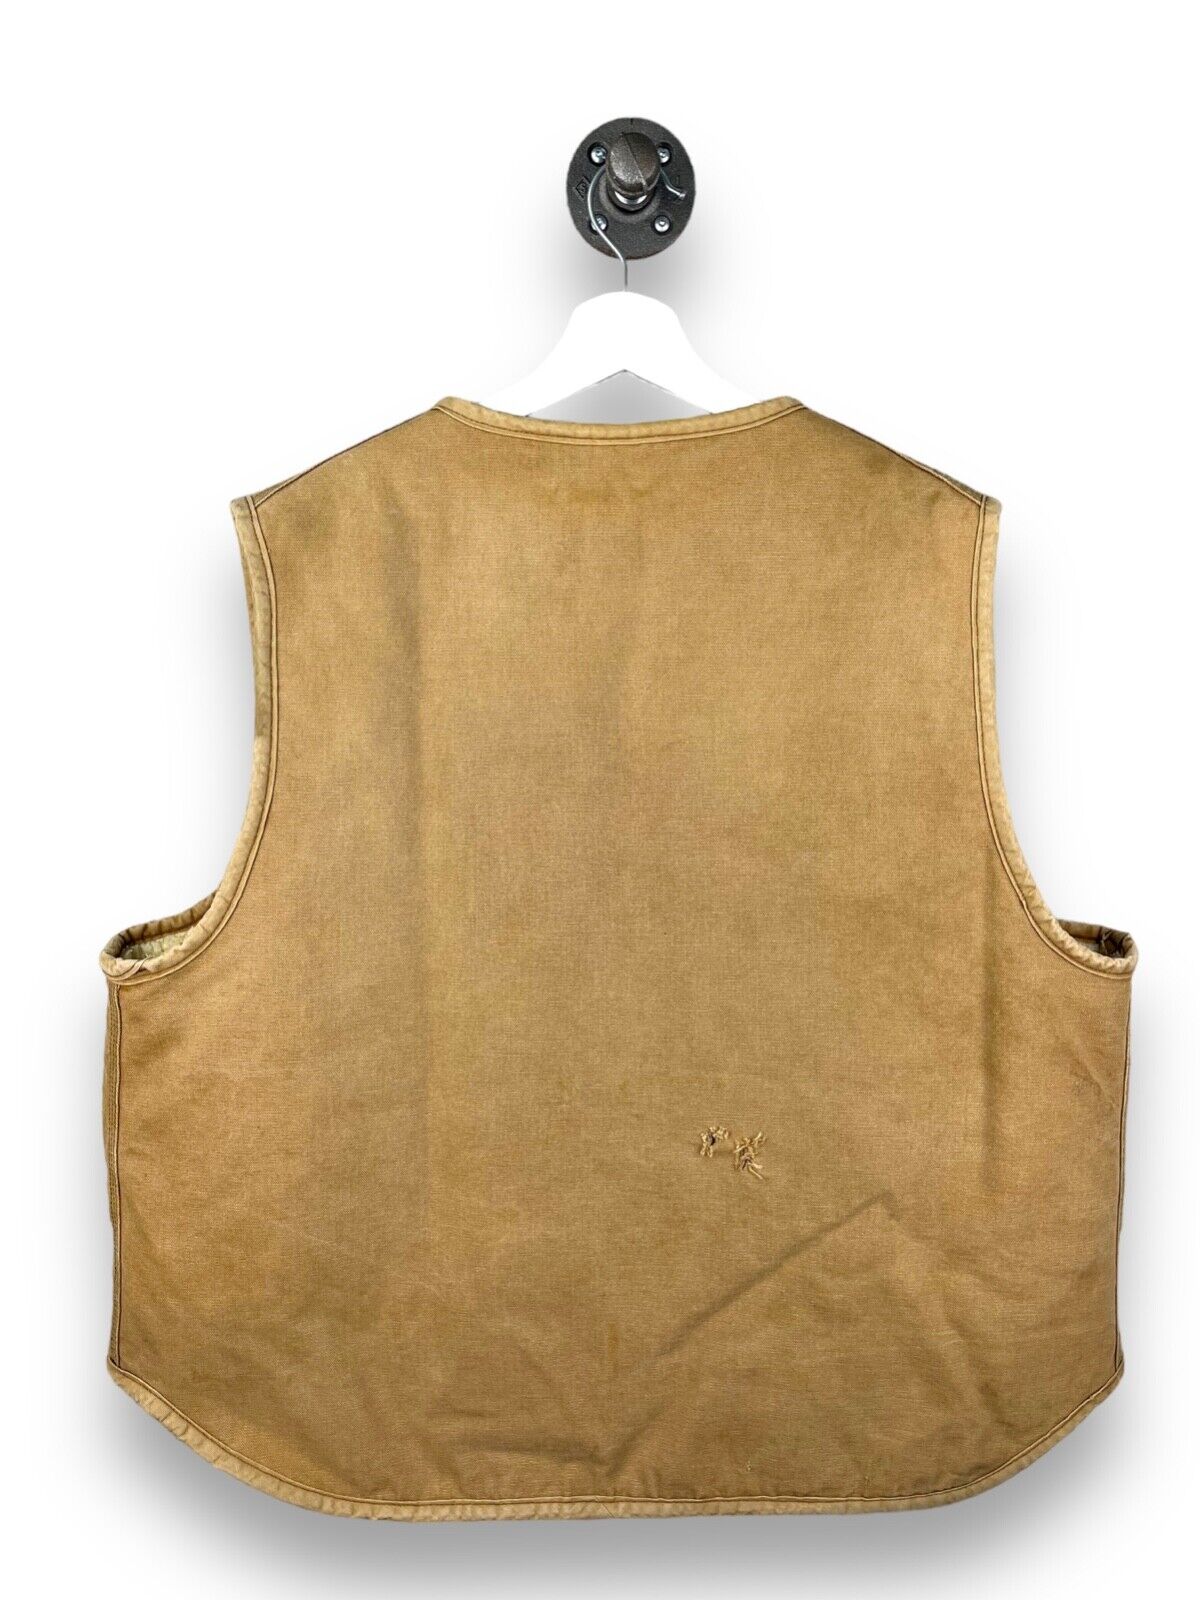 Vintage 70s/80s Carhartt Canvas Workwear Sherpa Lined Vest Jacket Size 2XL Beige